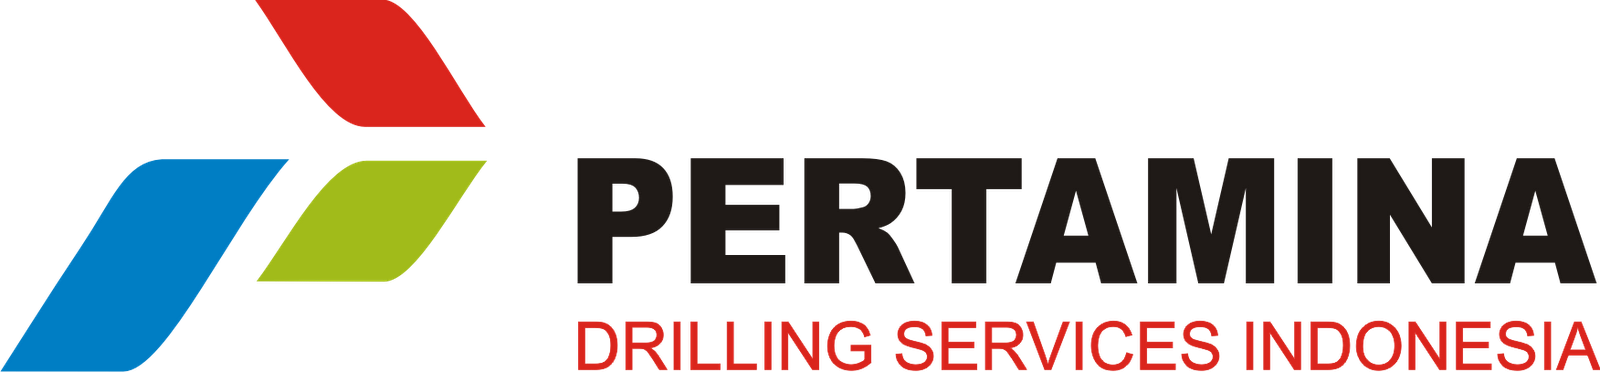 Gaji PT Pertamina Drilling Services Indonesia Terbaru